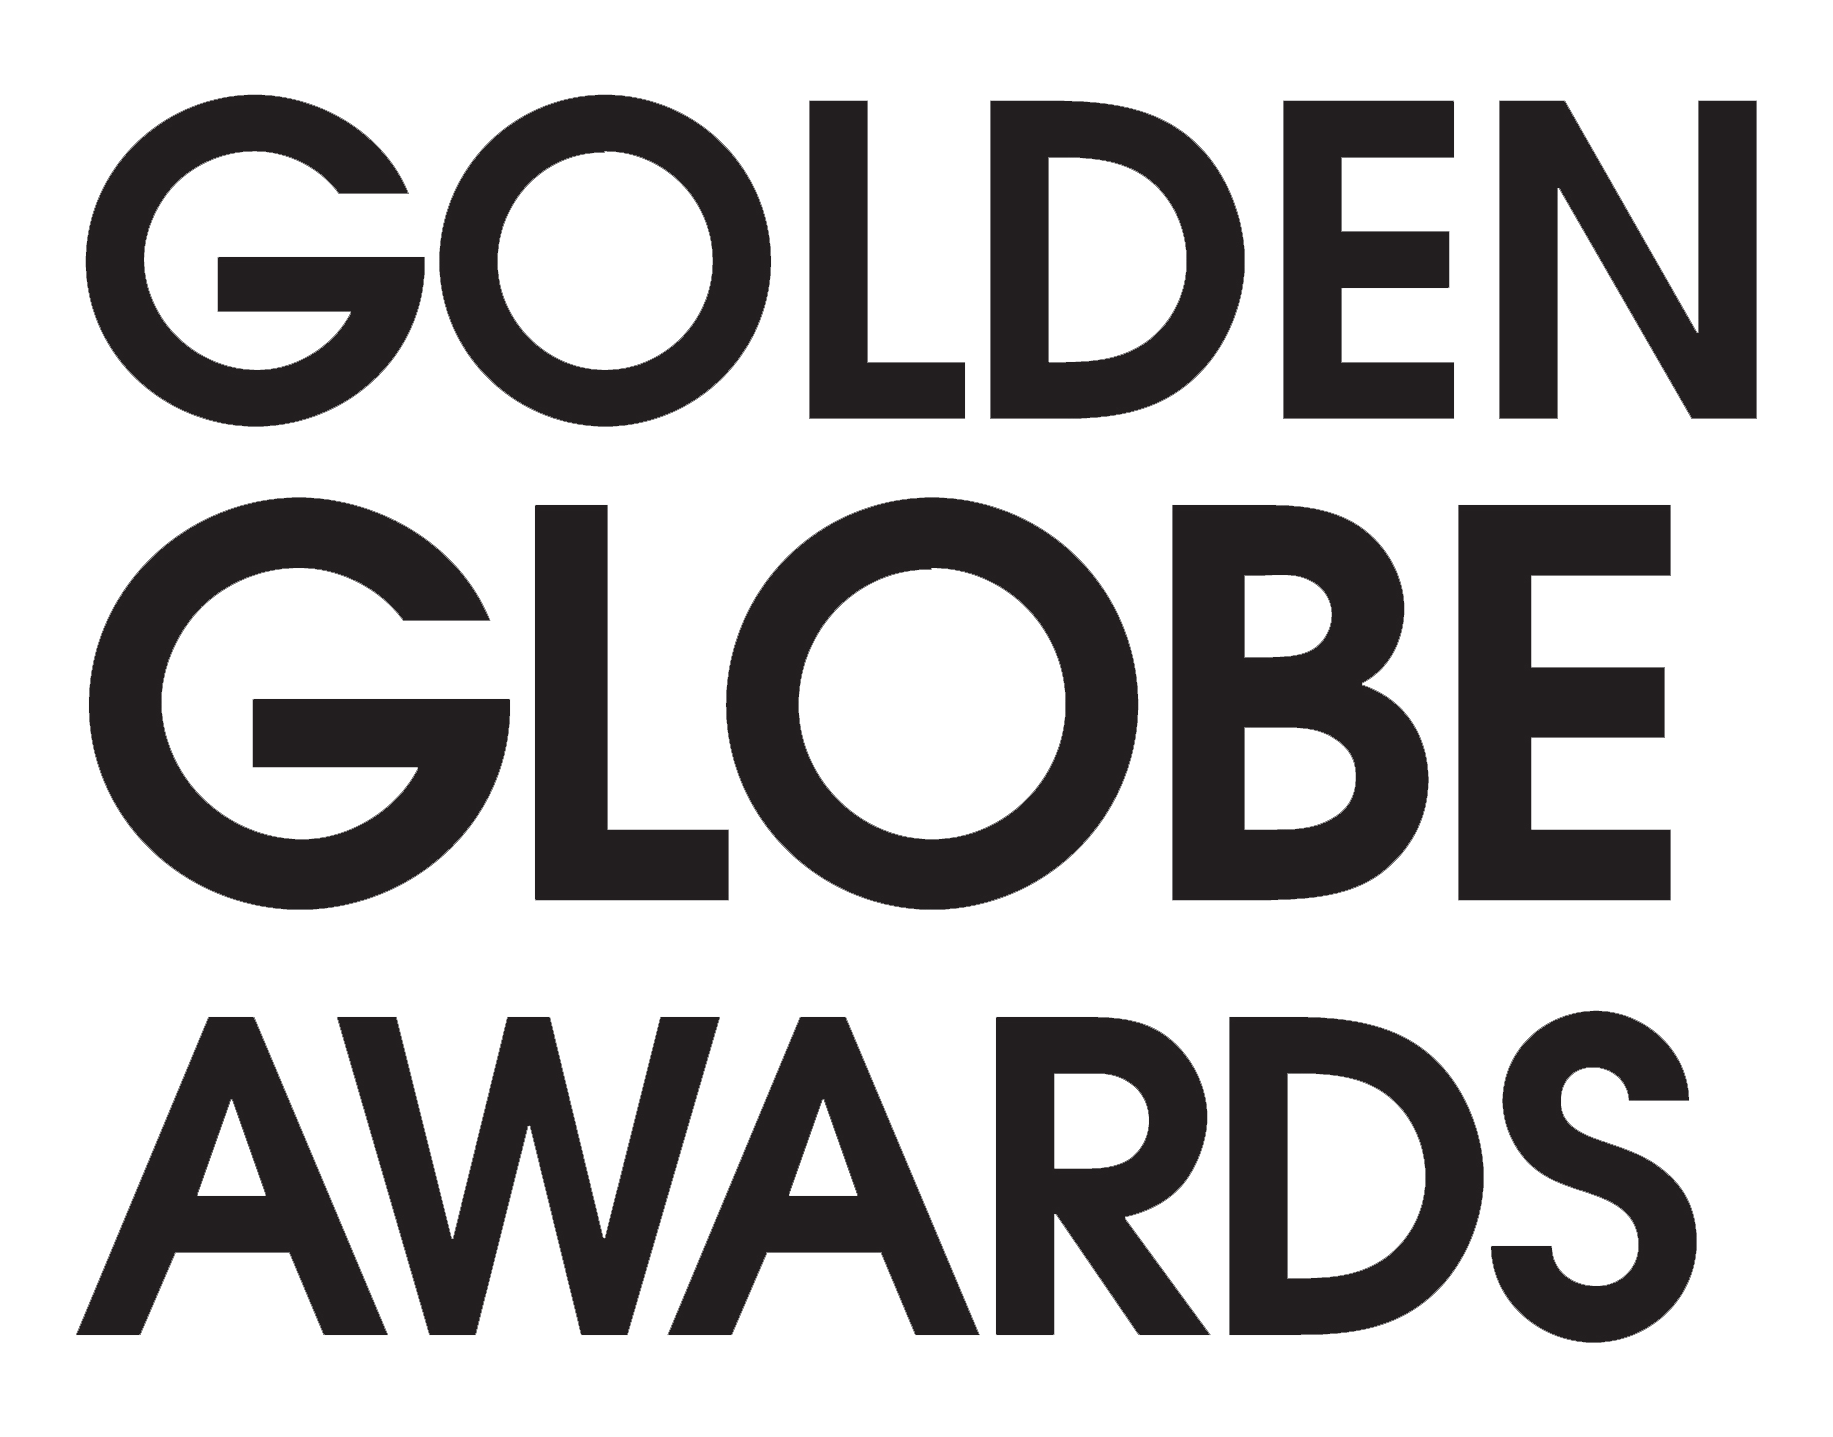 Golden Globe Logo - File:Golden Globe text logo.png - Wikimedia Commons